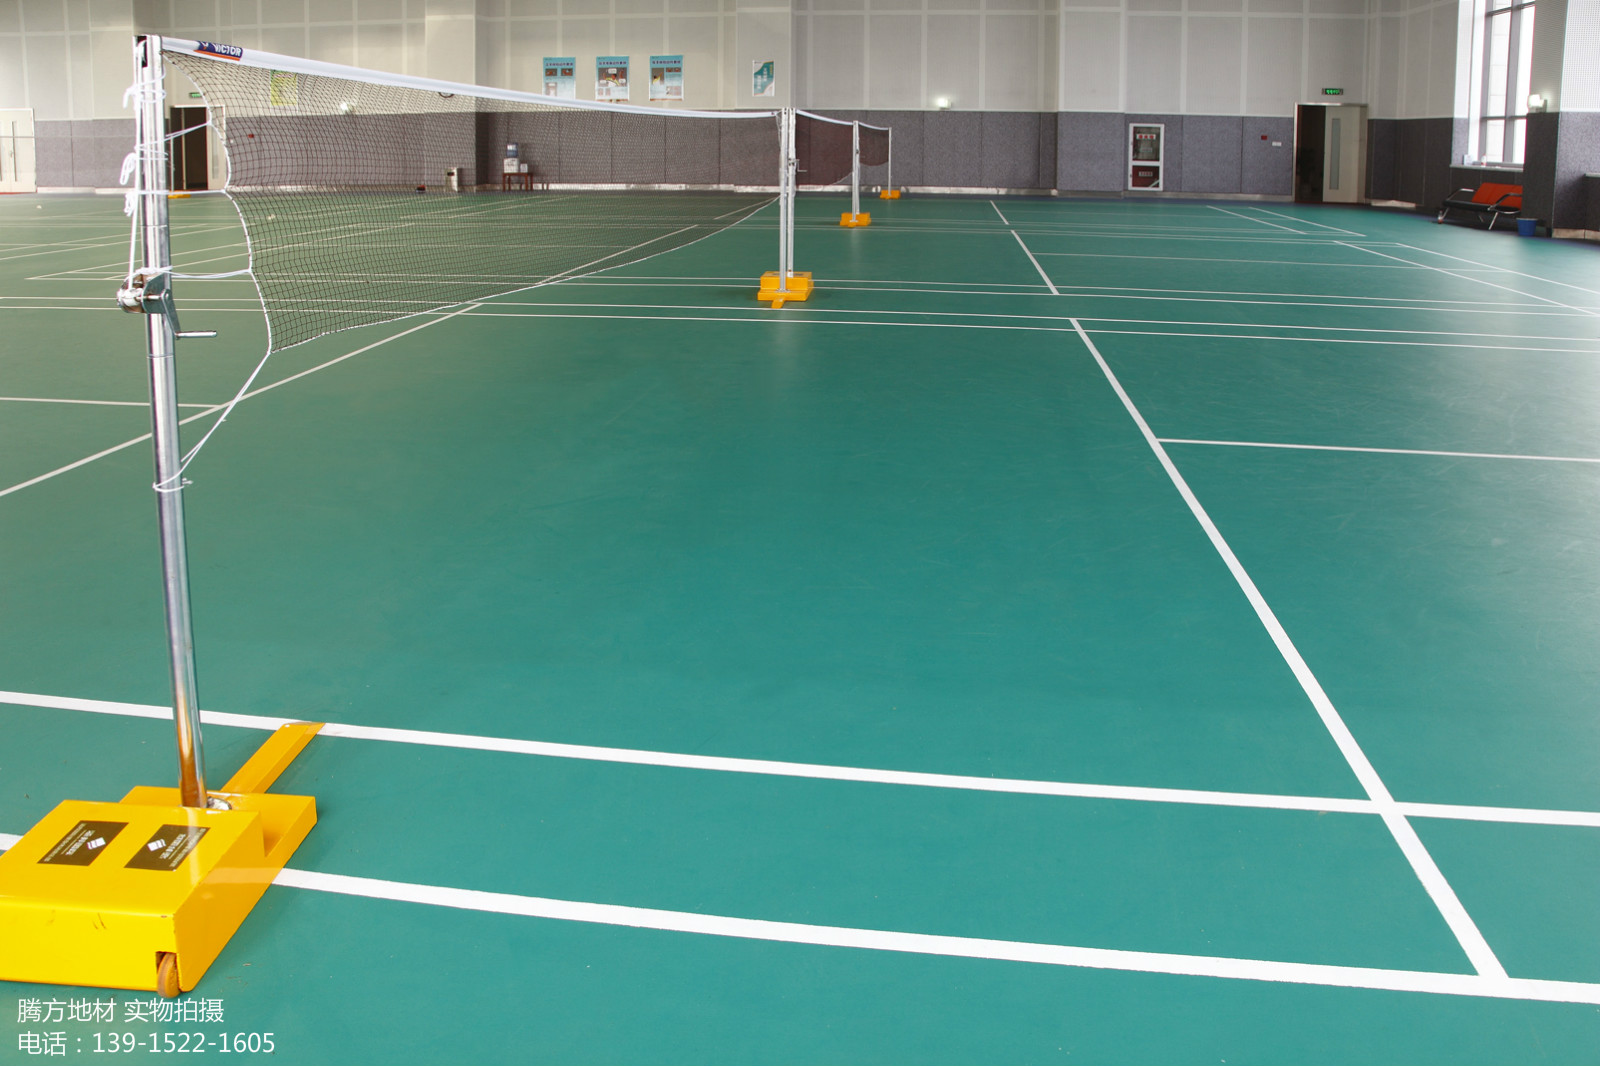 PVC塑胶地板相对于传统地板而言具有哪些优势？